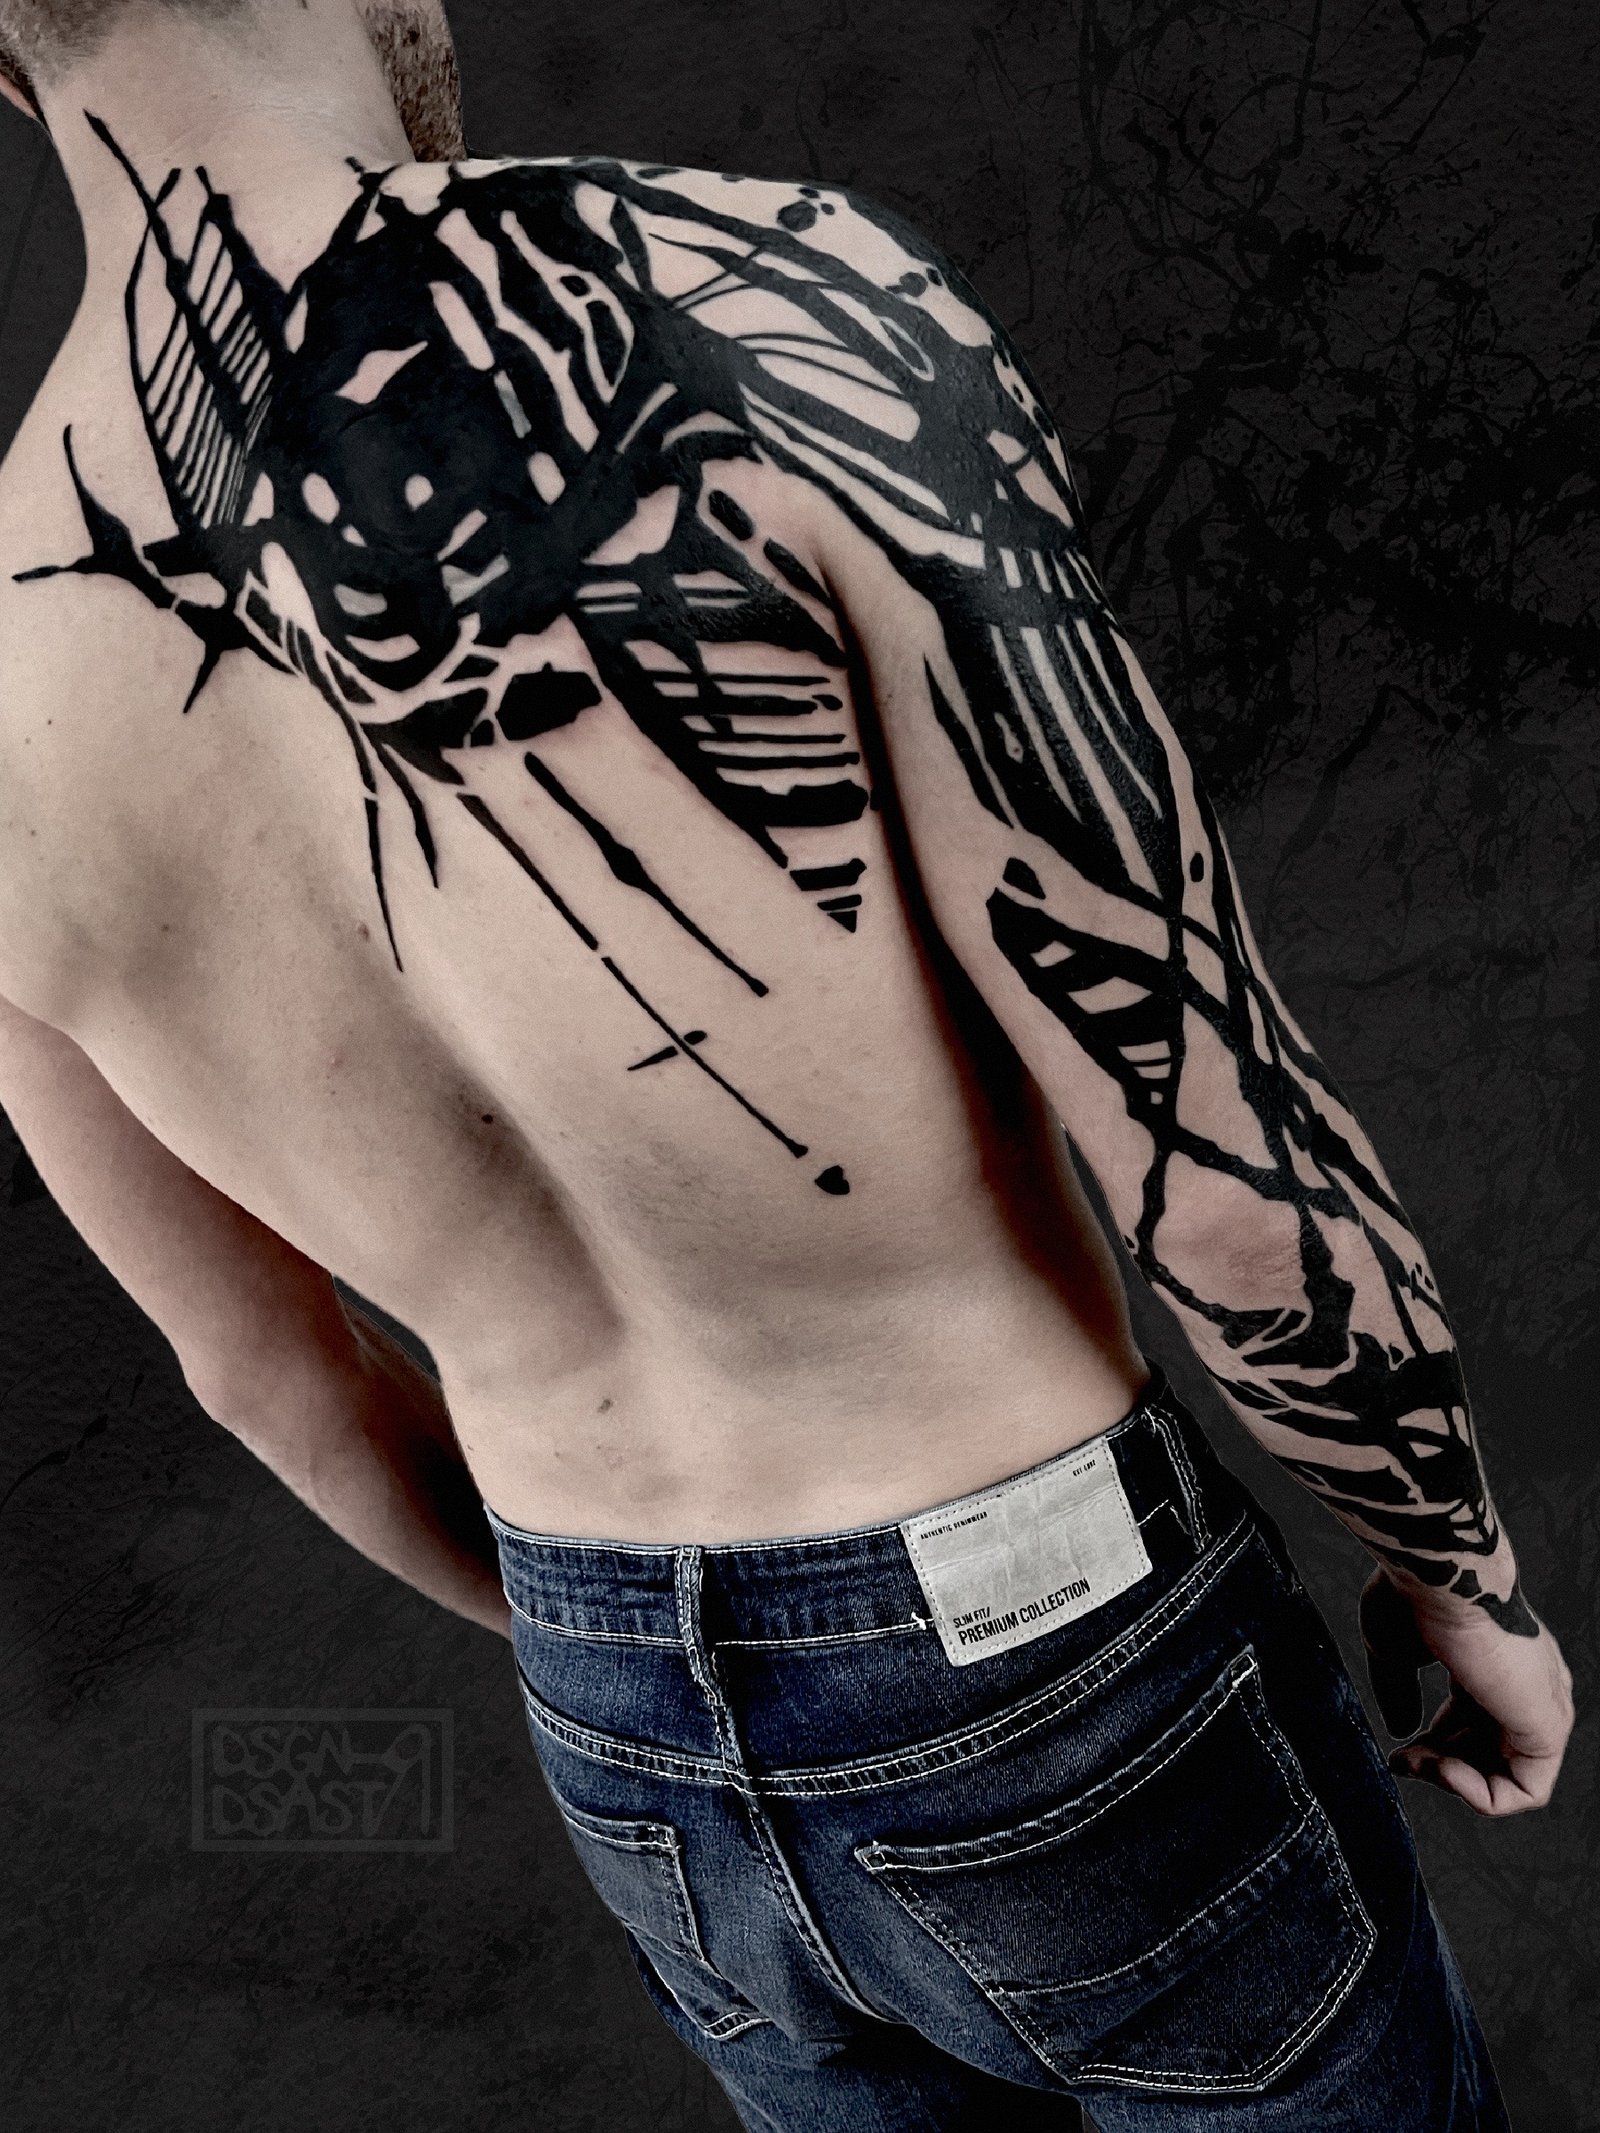 Blackout Tattoo: piel y tinta negra